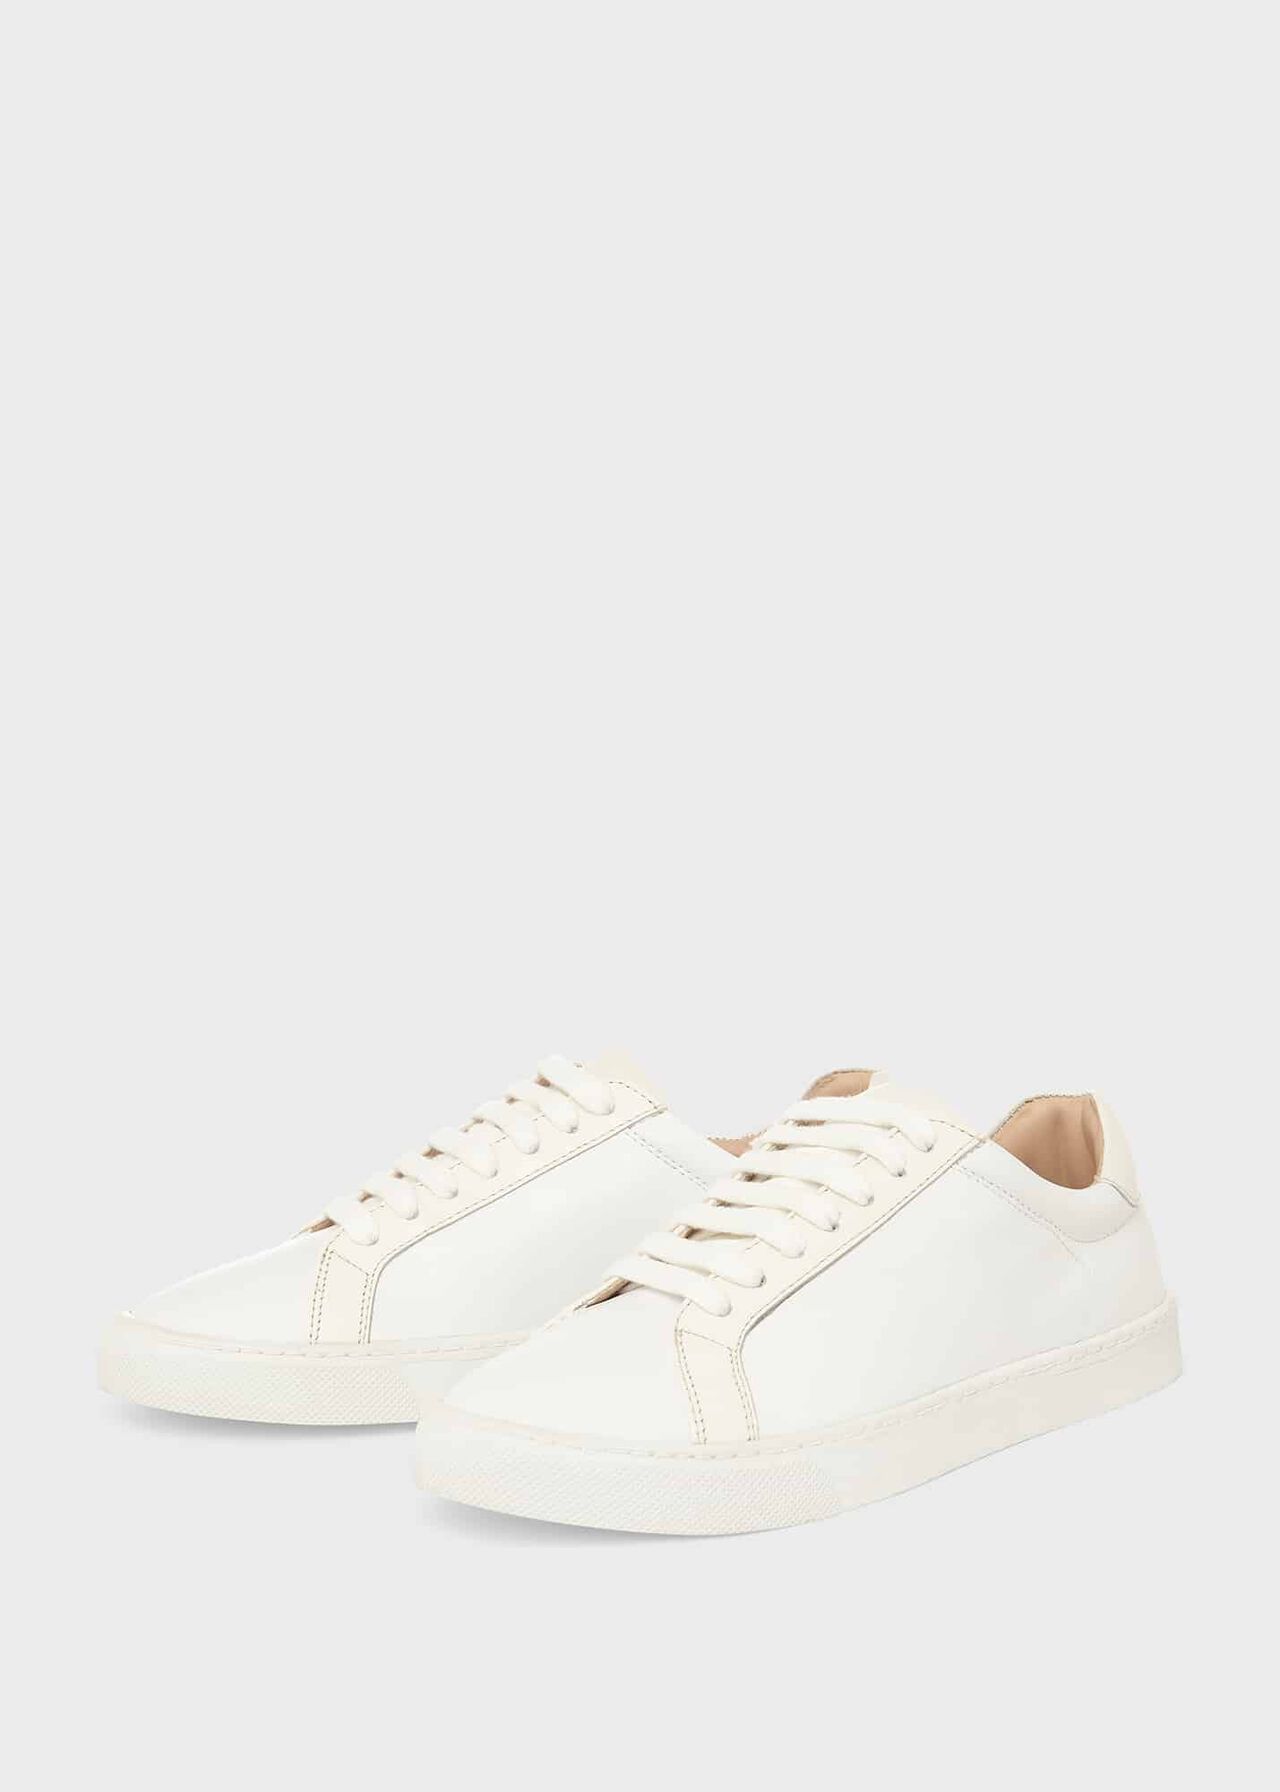 Arwen Sneakers, White, hi-res